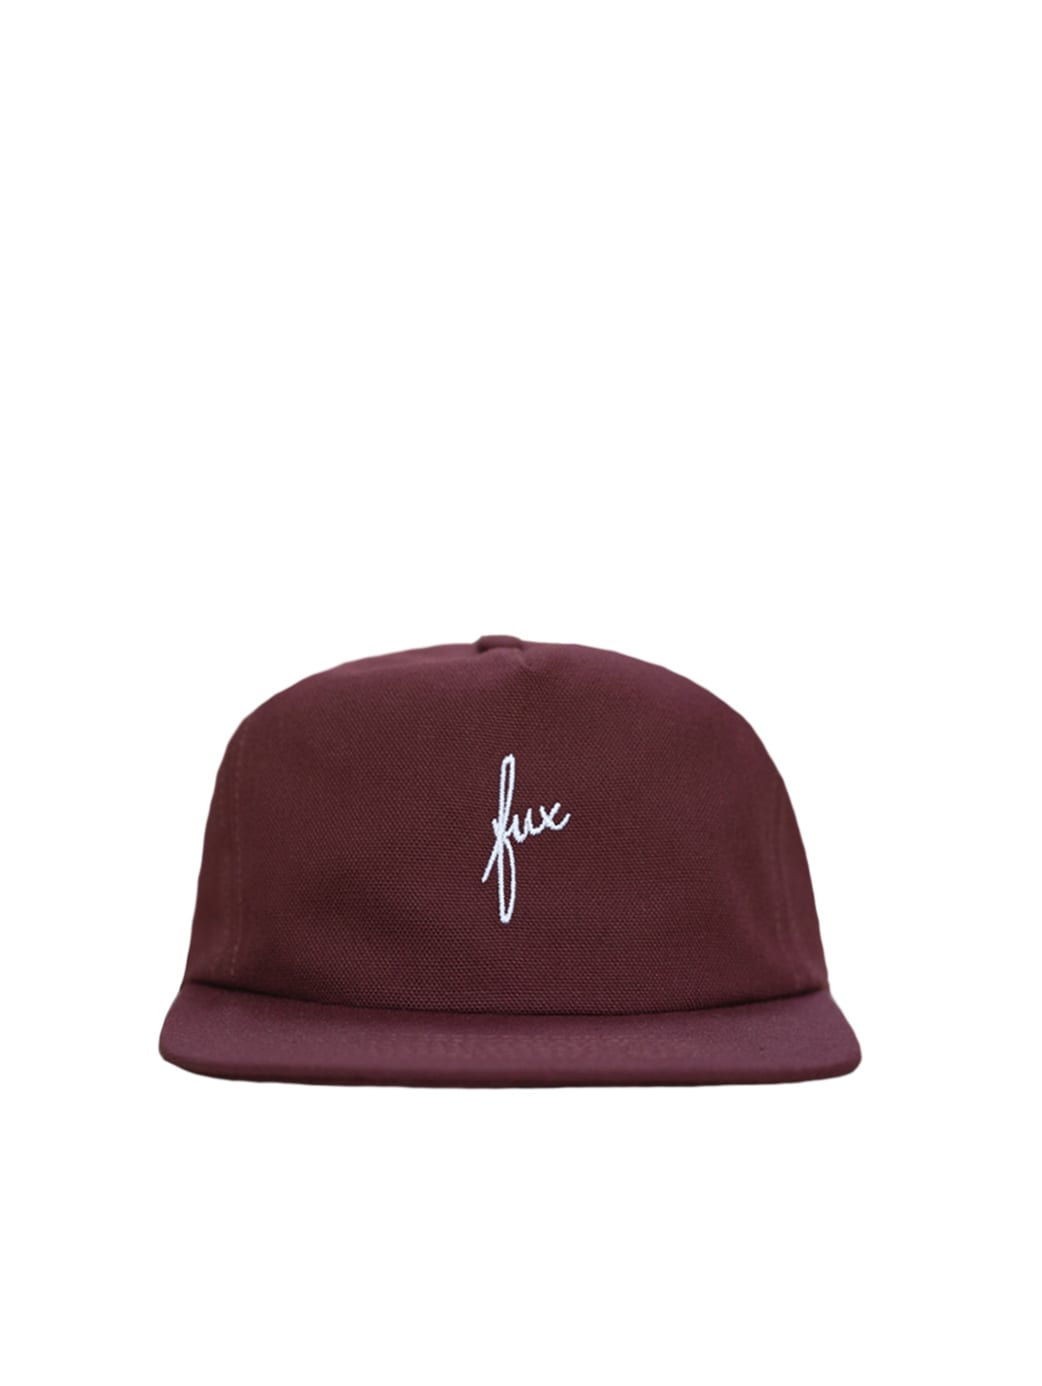 Fair Fashion fux Cap in bordeaux aus 100% Biobaumwolle